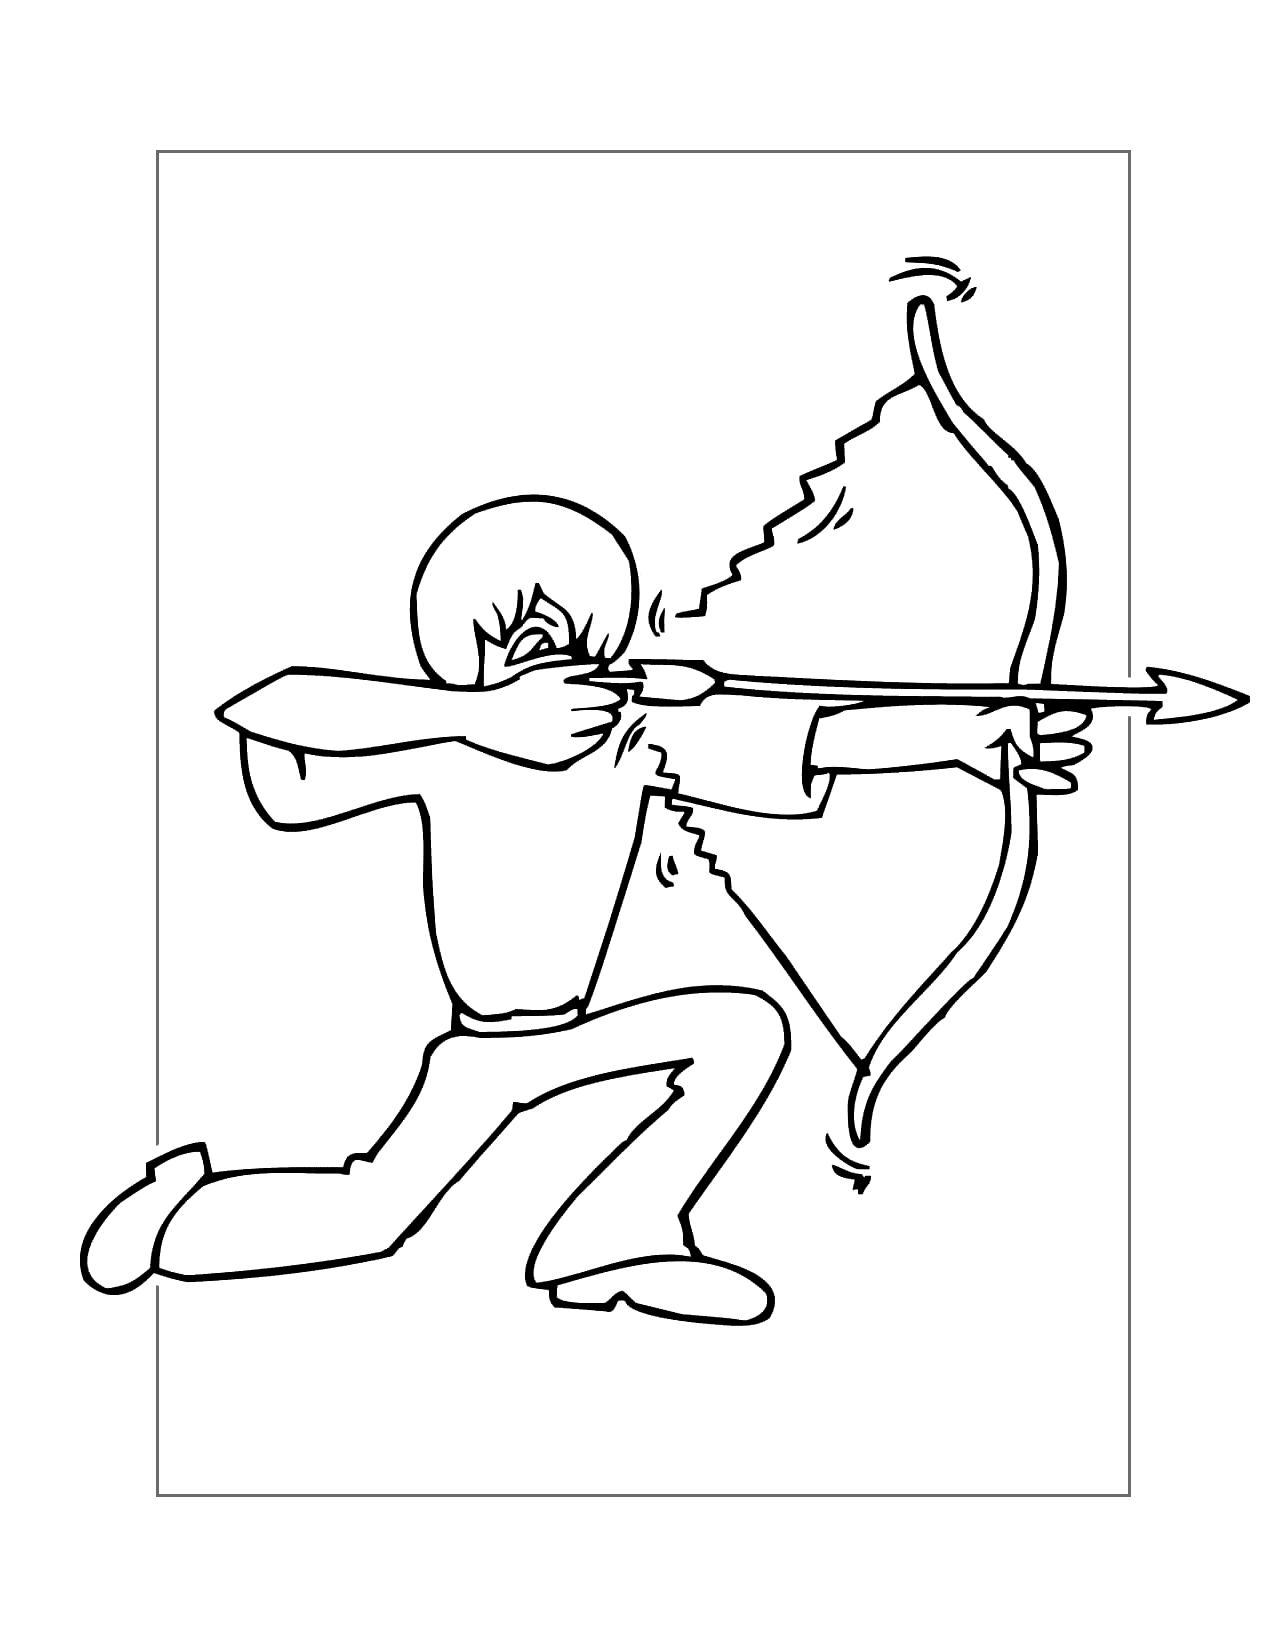 Man Shooting Arrow Coloring Page